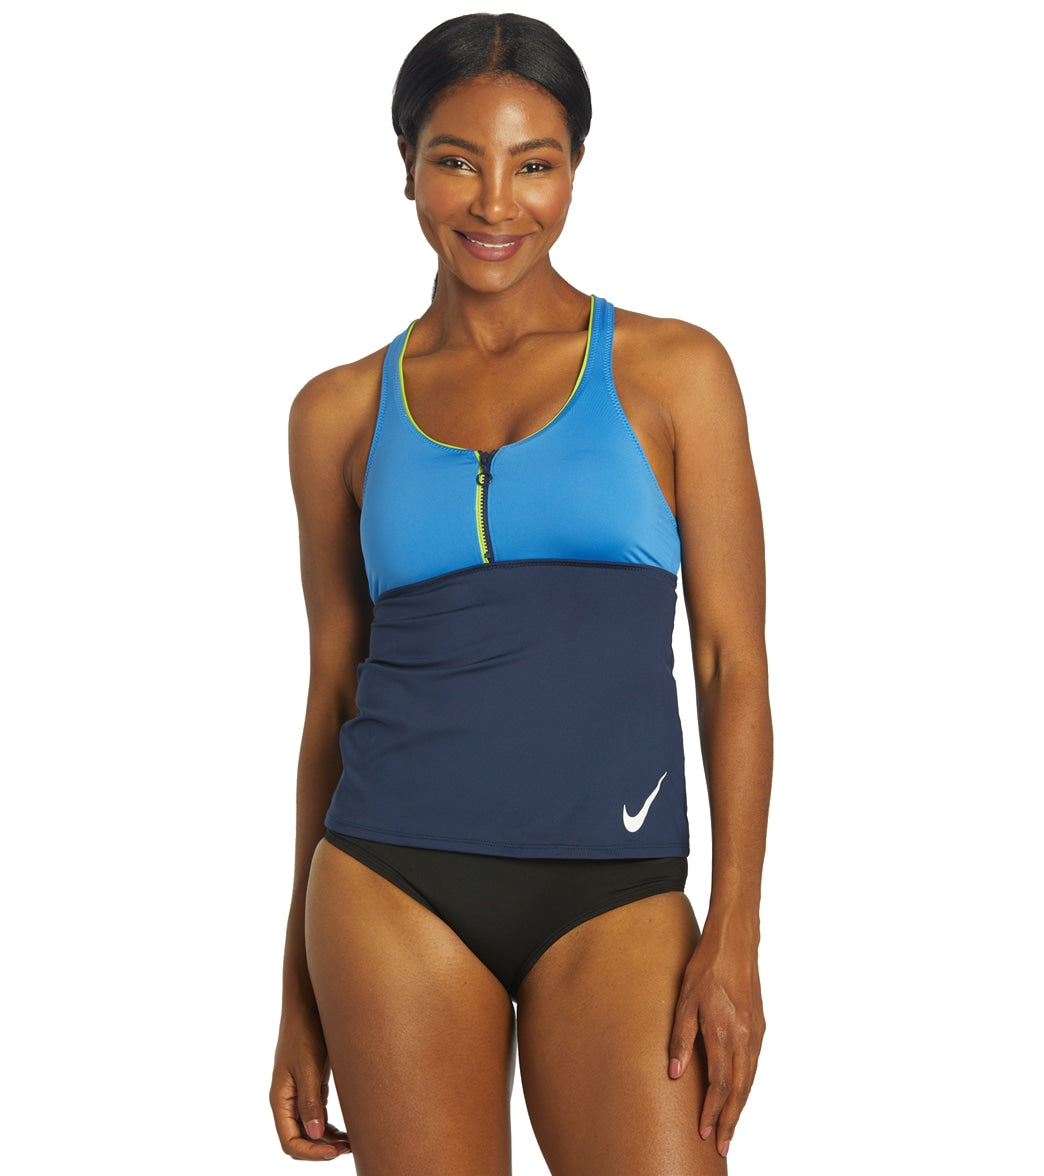 Nike Women's Colorblock Racerback Tankini Top at SwimOutlet.com